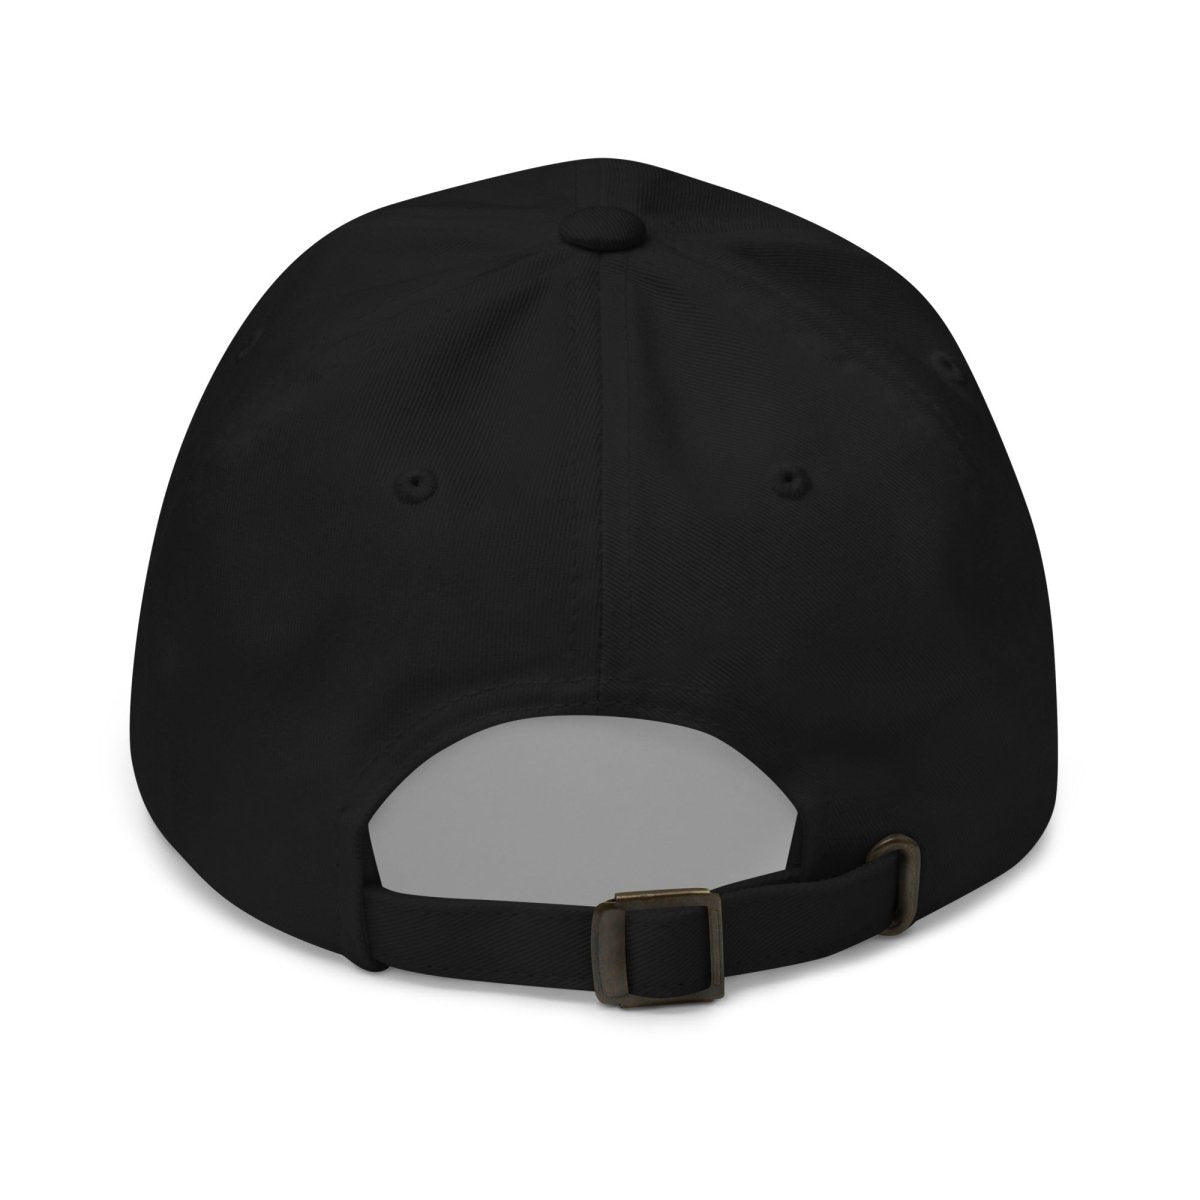 Black Hat Embroidered Cap - Black - AI Store